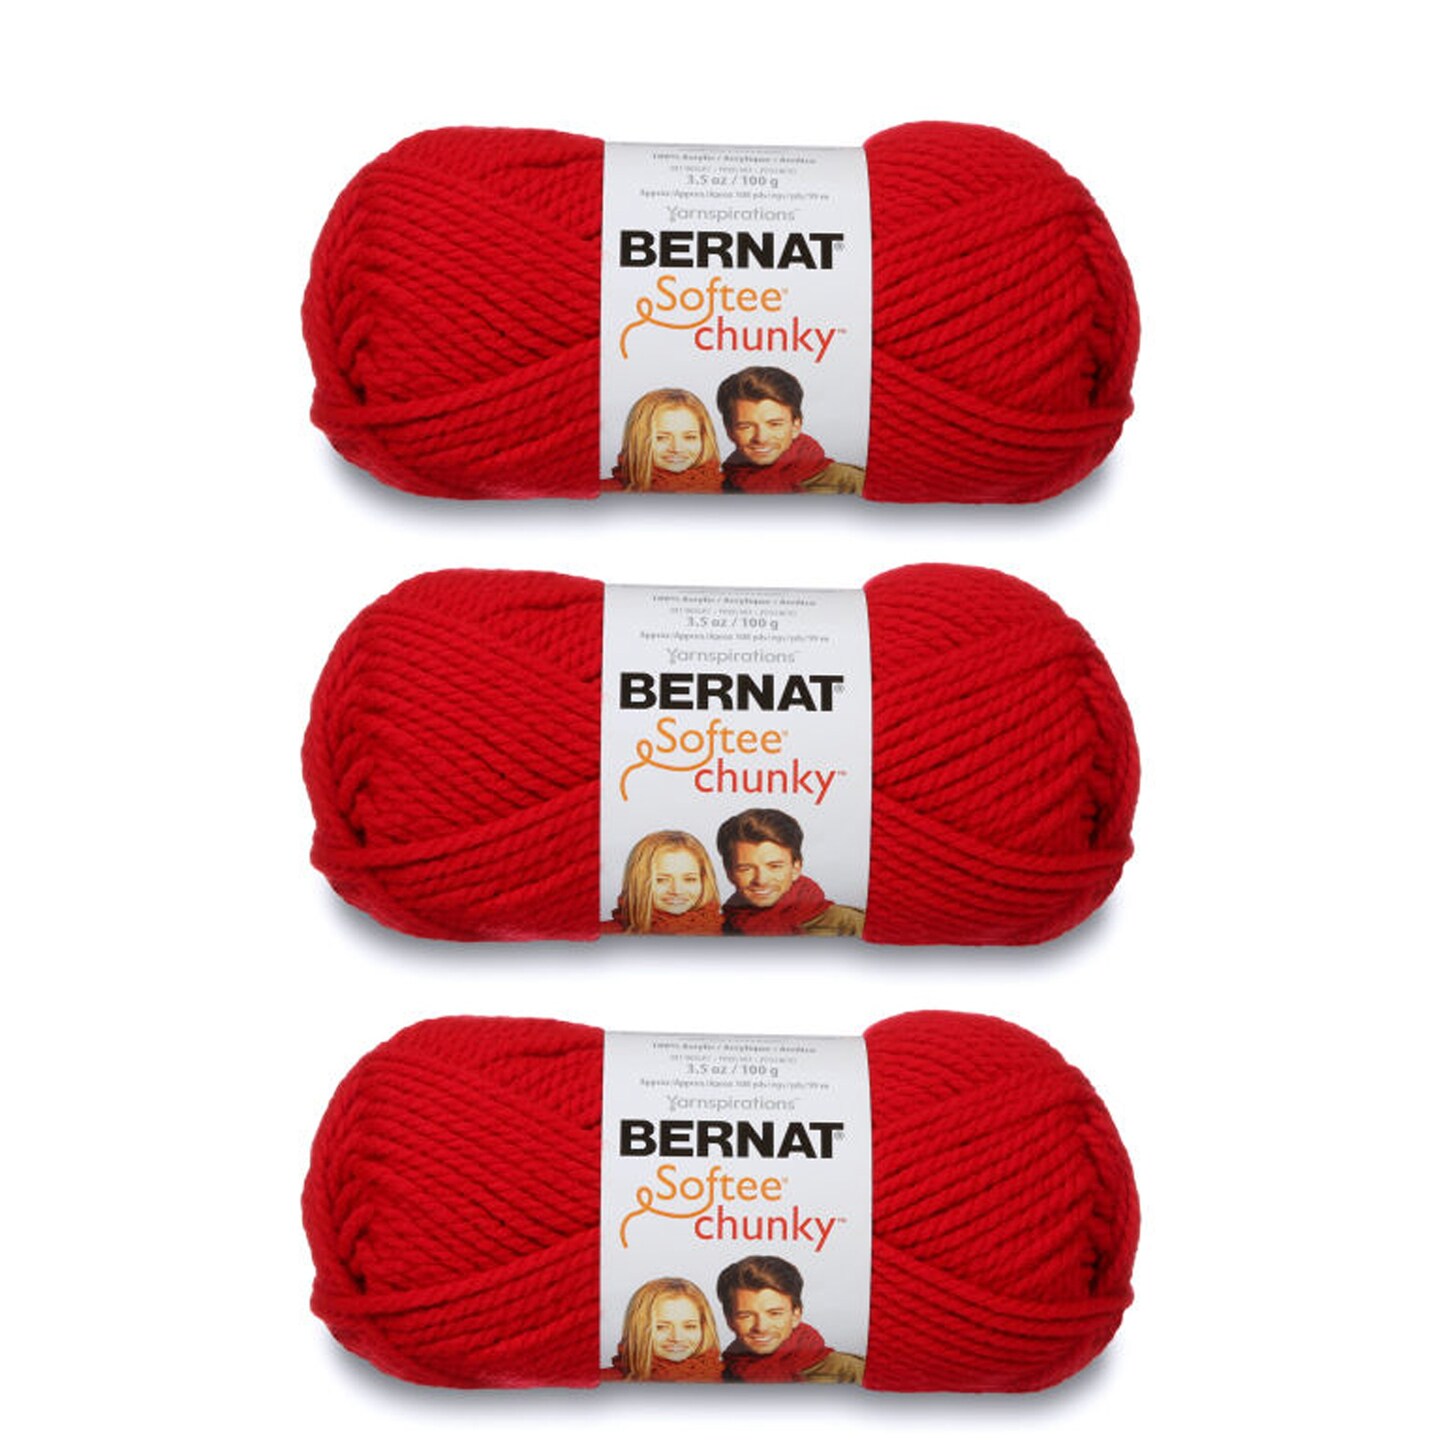 Bernat Softee Chunky Yarn-Berry Red, Multipack Of 6